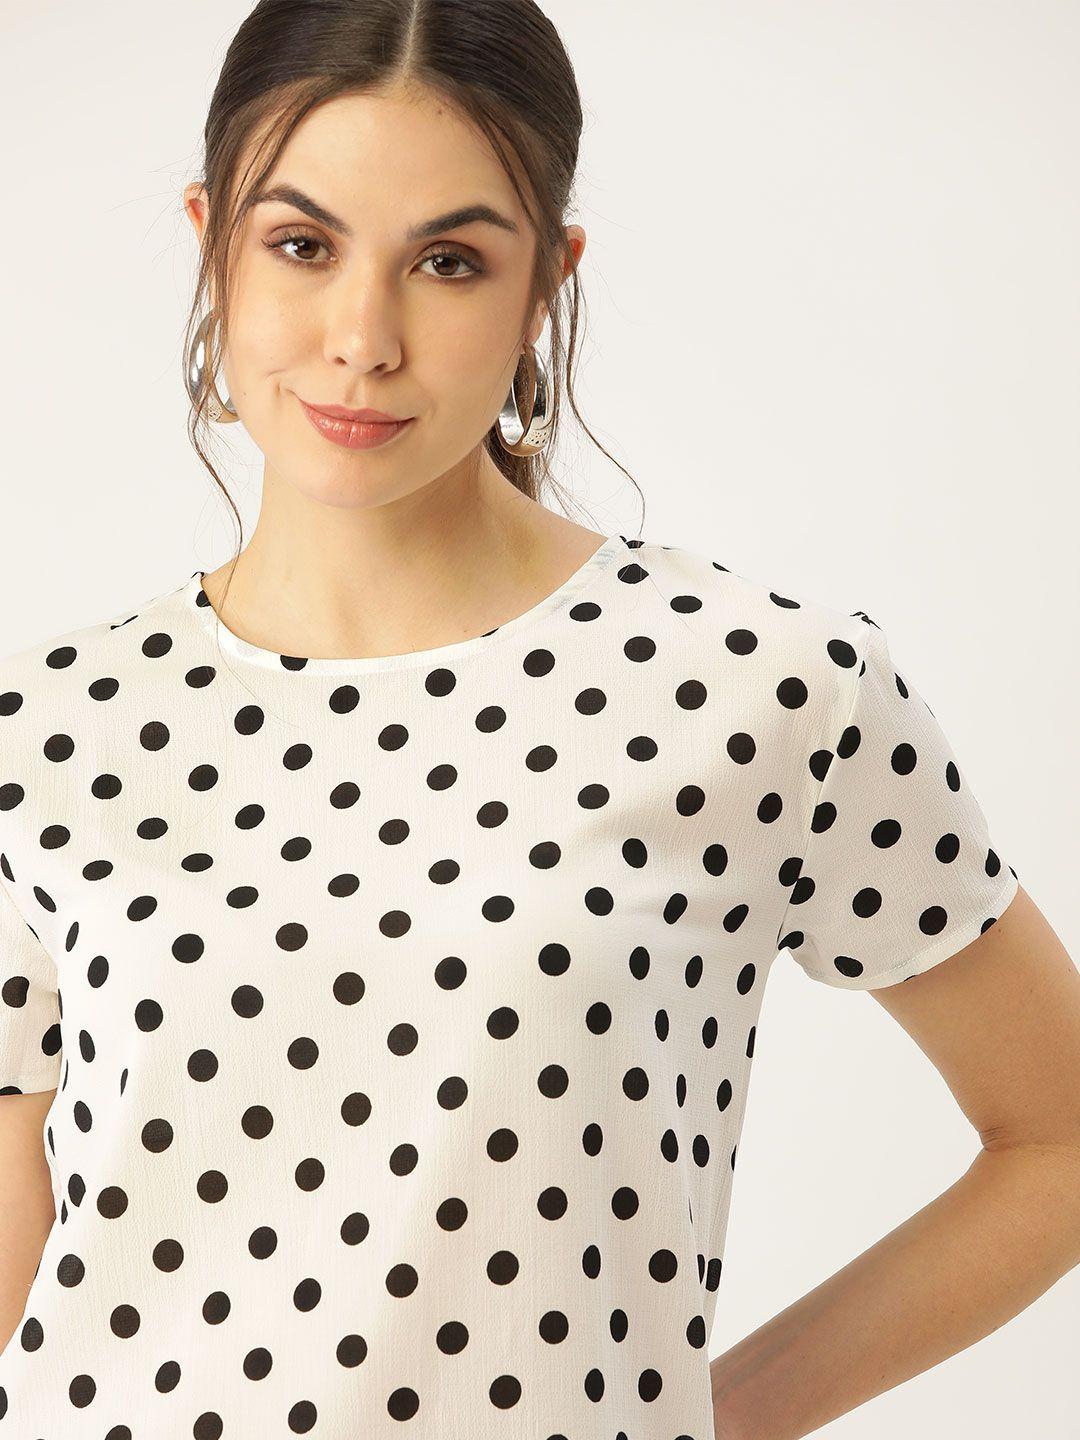 all about you women white & black polka dots print regular top